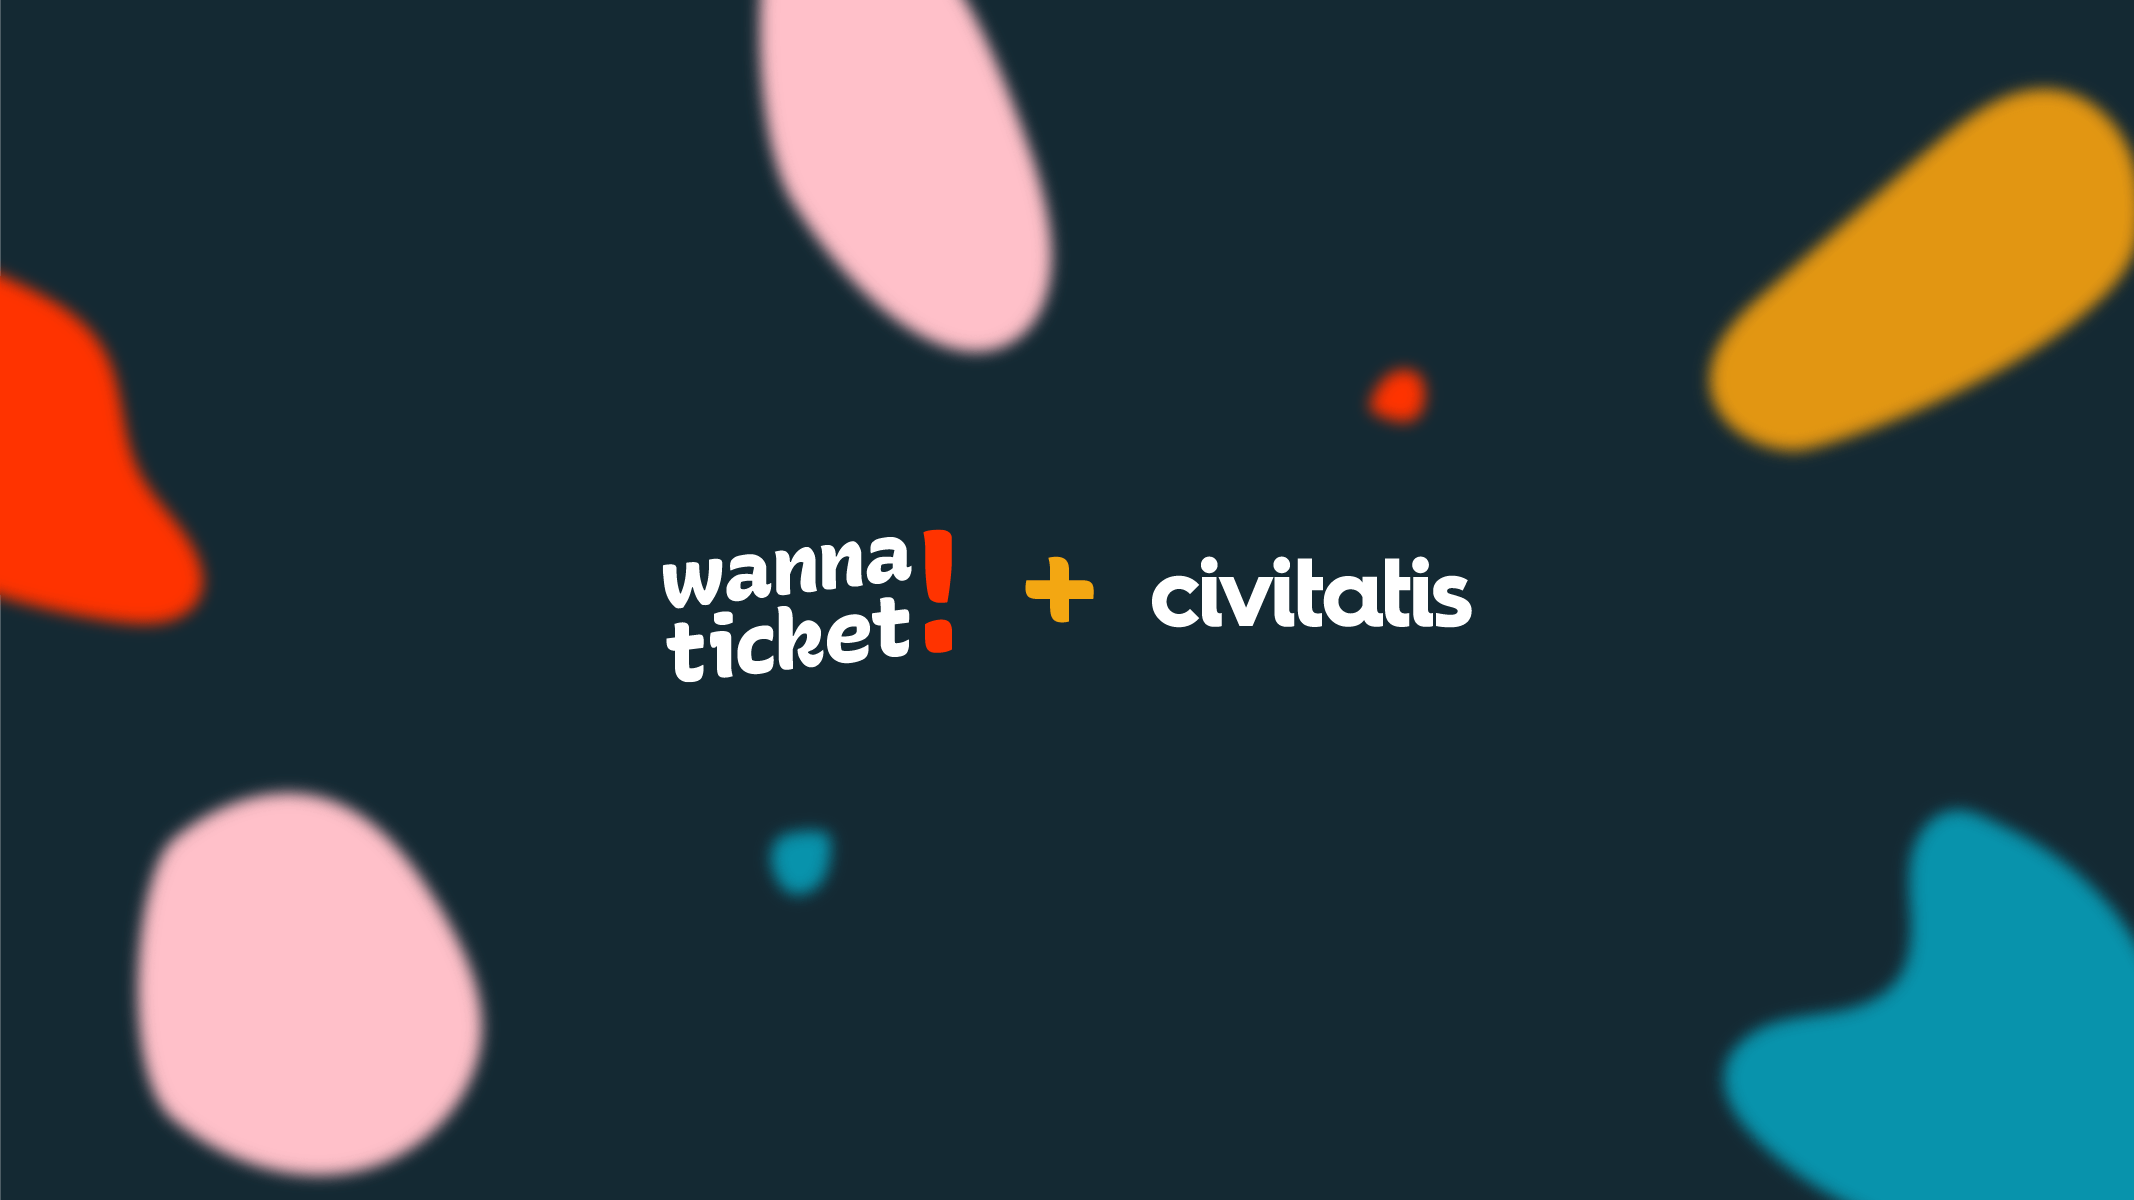 wannaticket and Civitatis logos